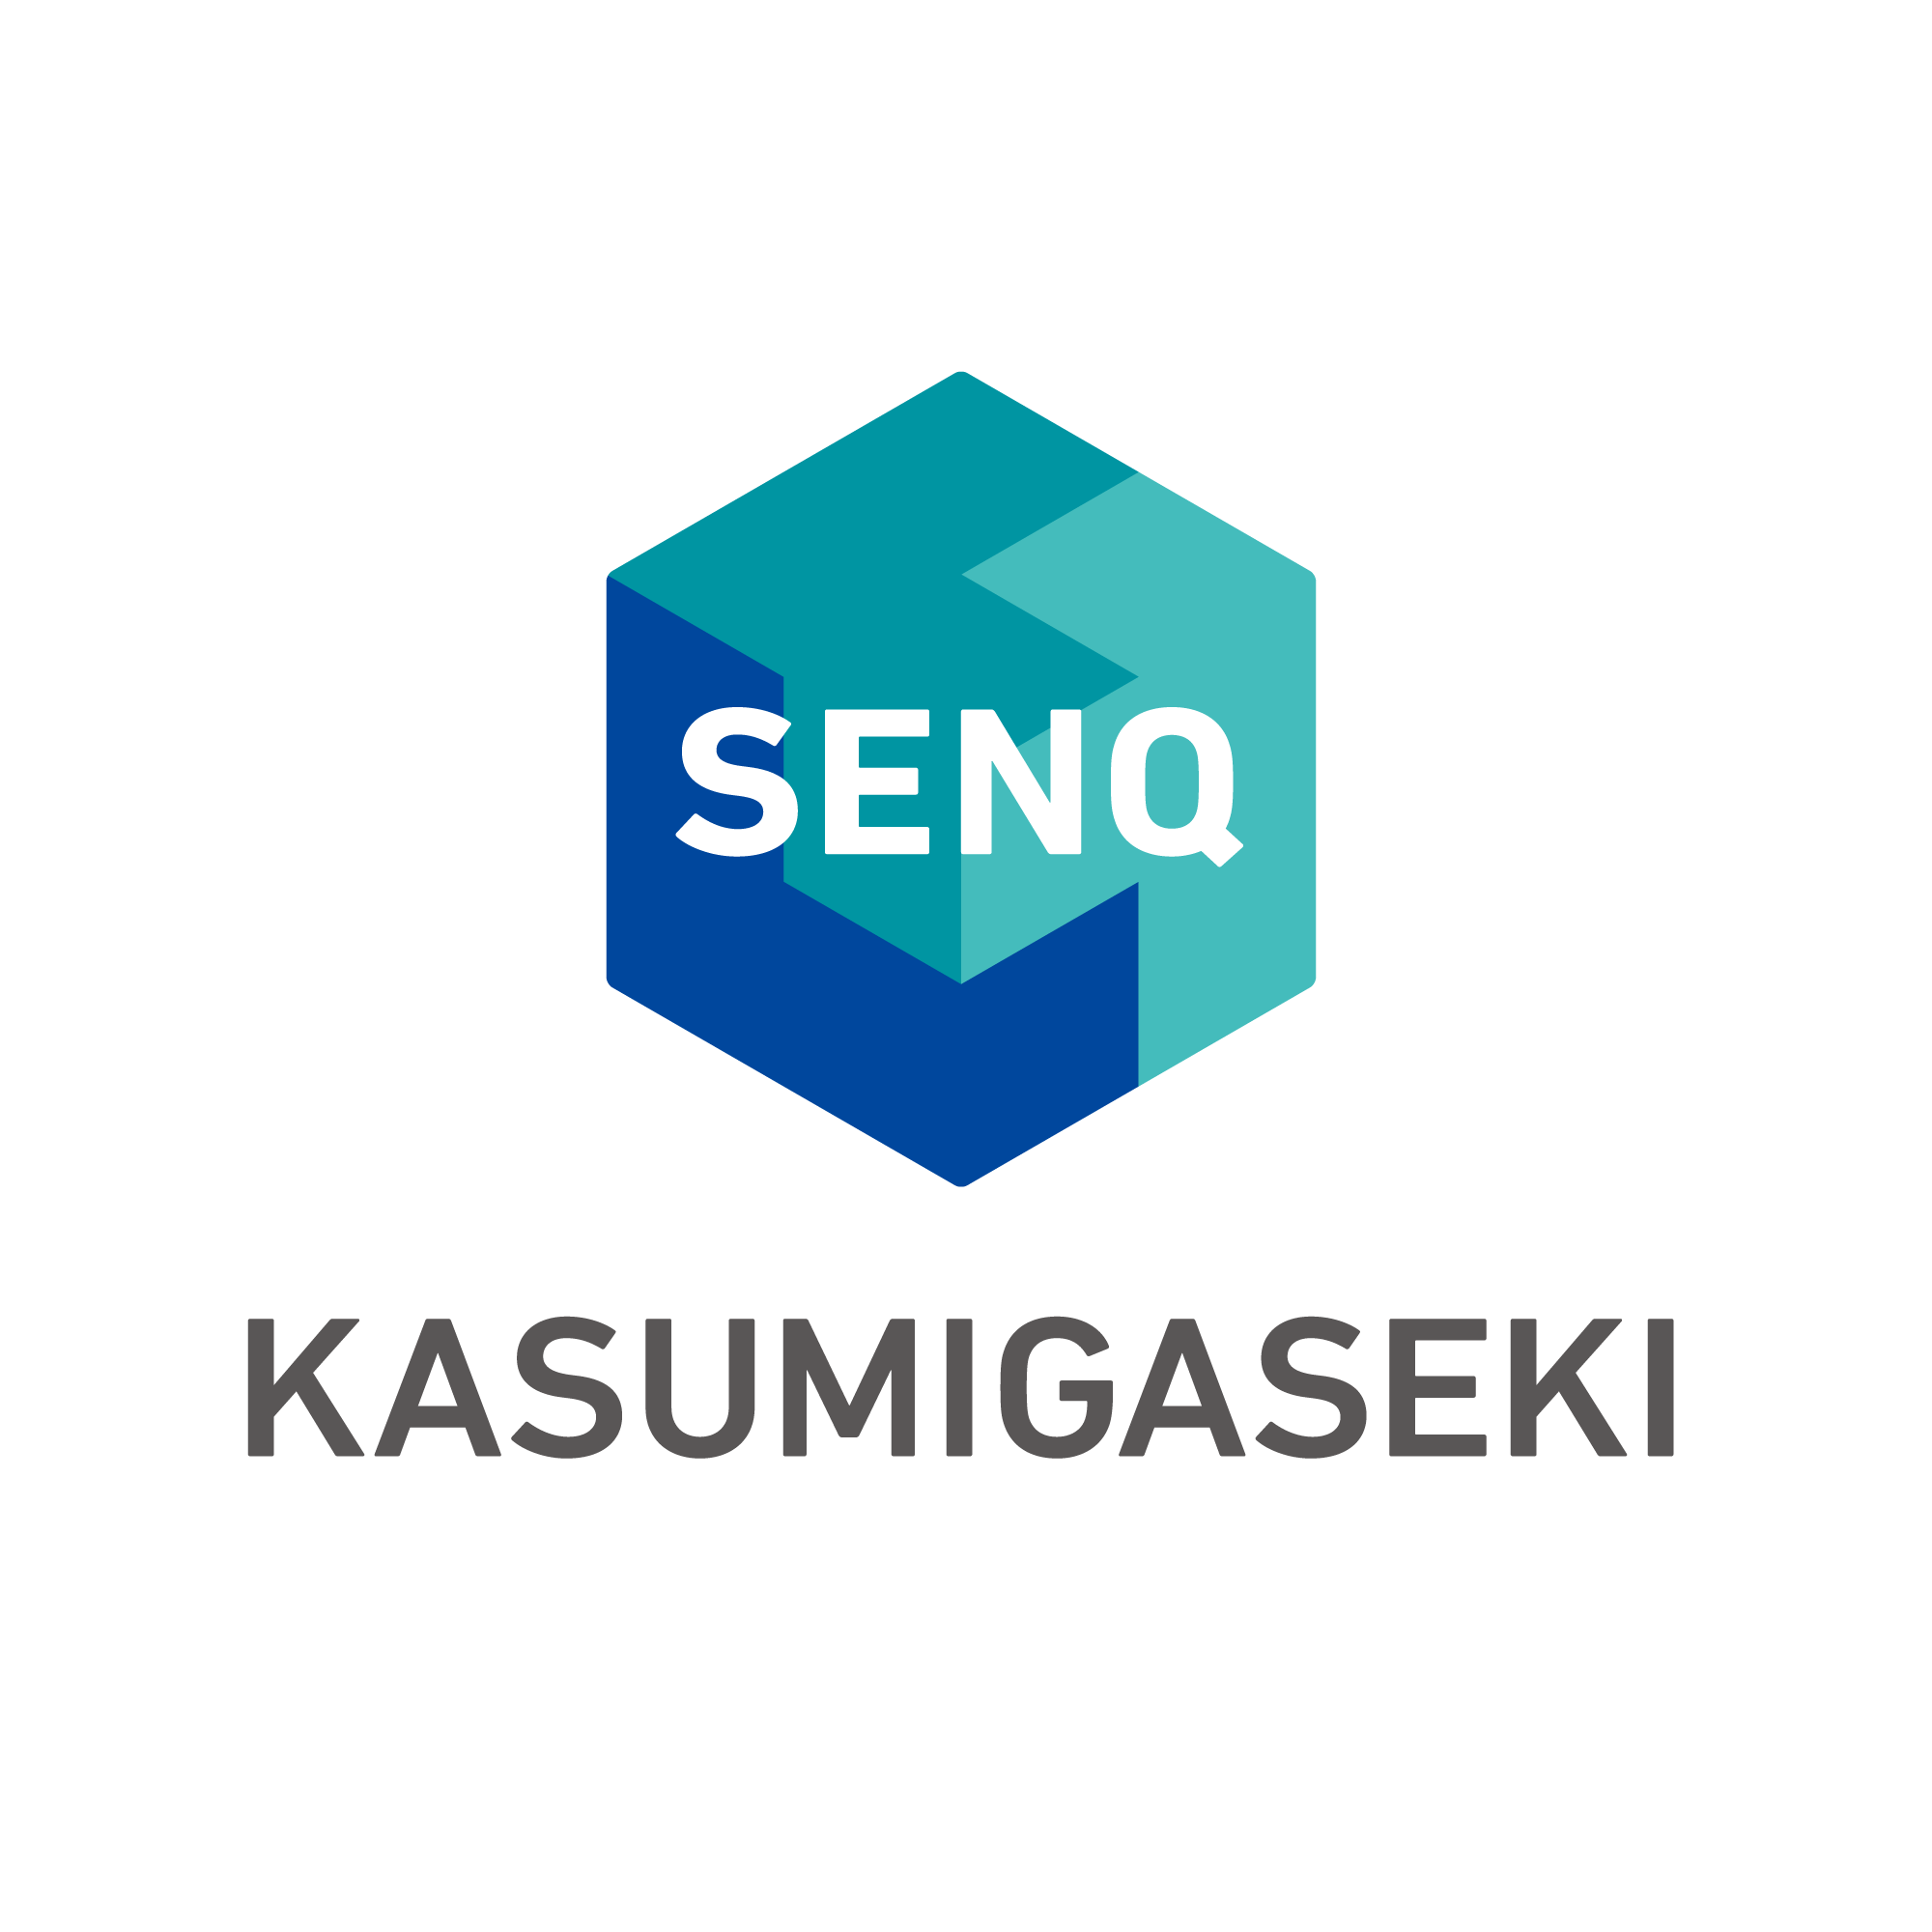 10_SENQ_brandlogo_KASUMIGASEKI_lockup_vertical